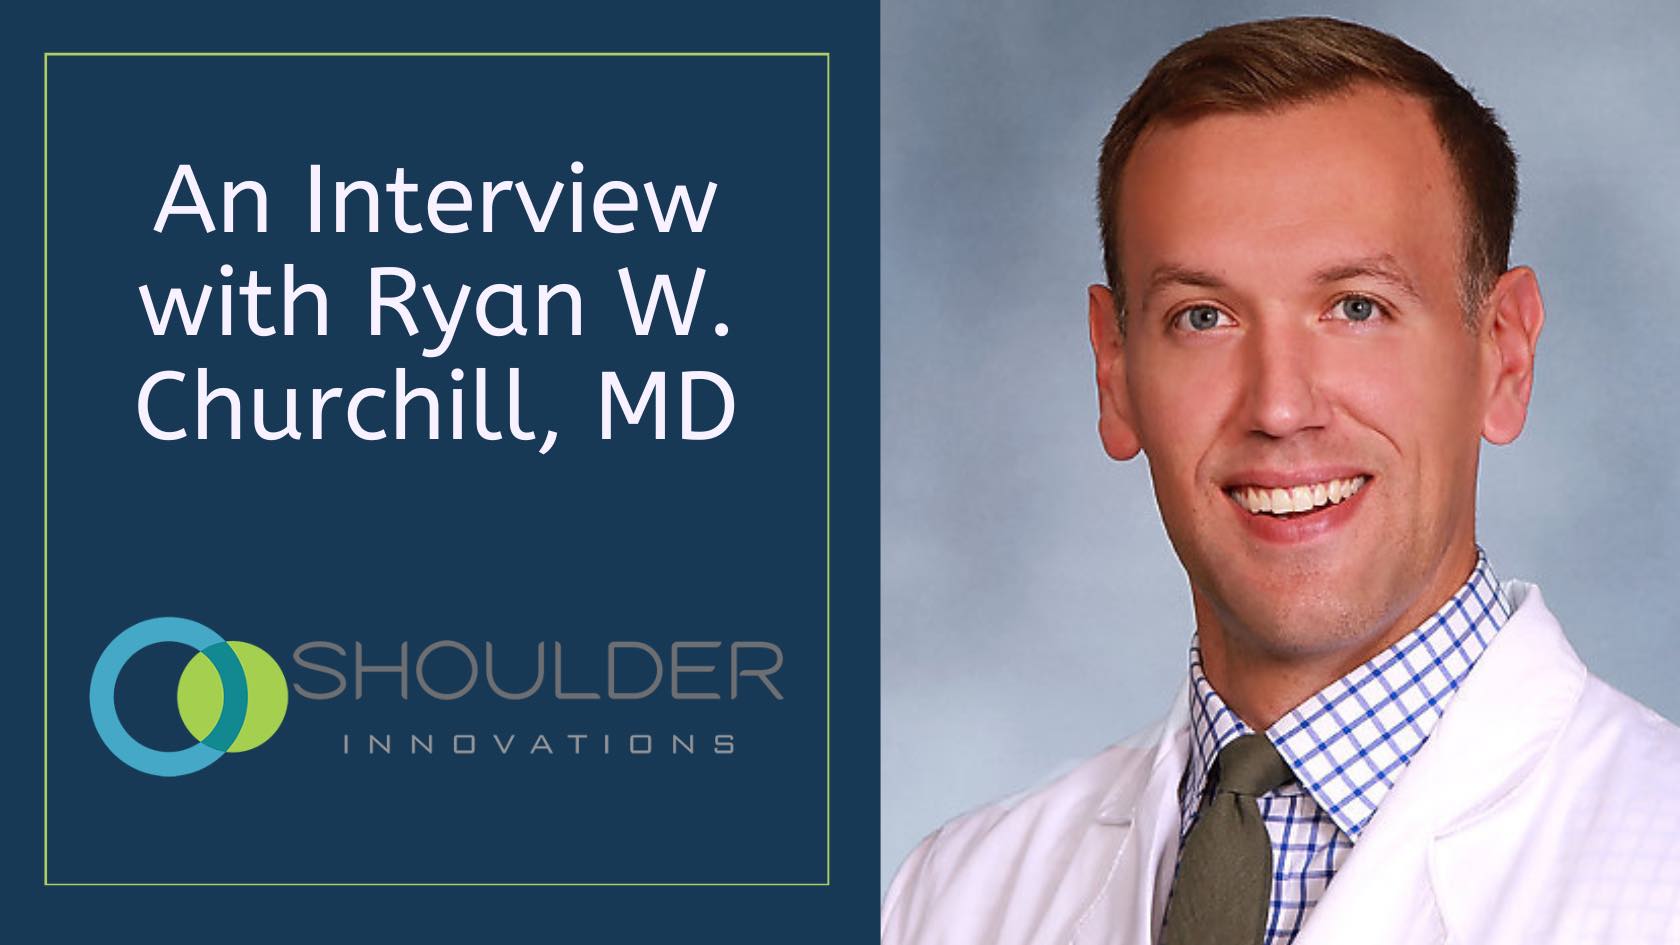 Dr. Ryan Churchill Shoulder Innovations interview